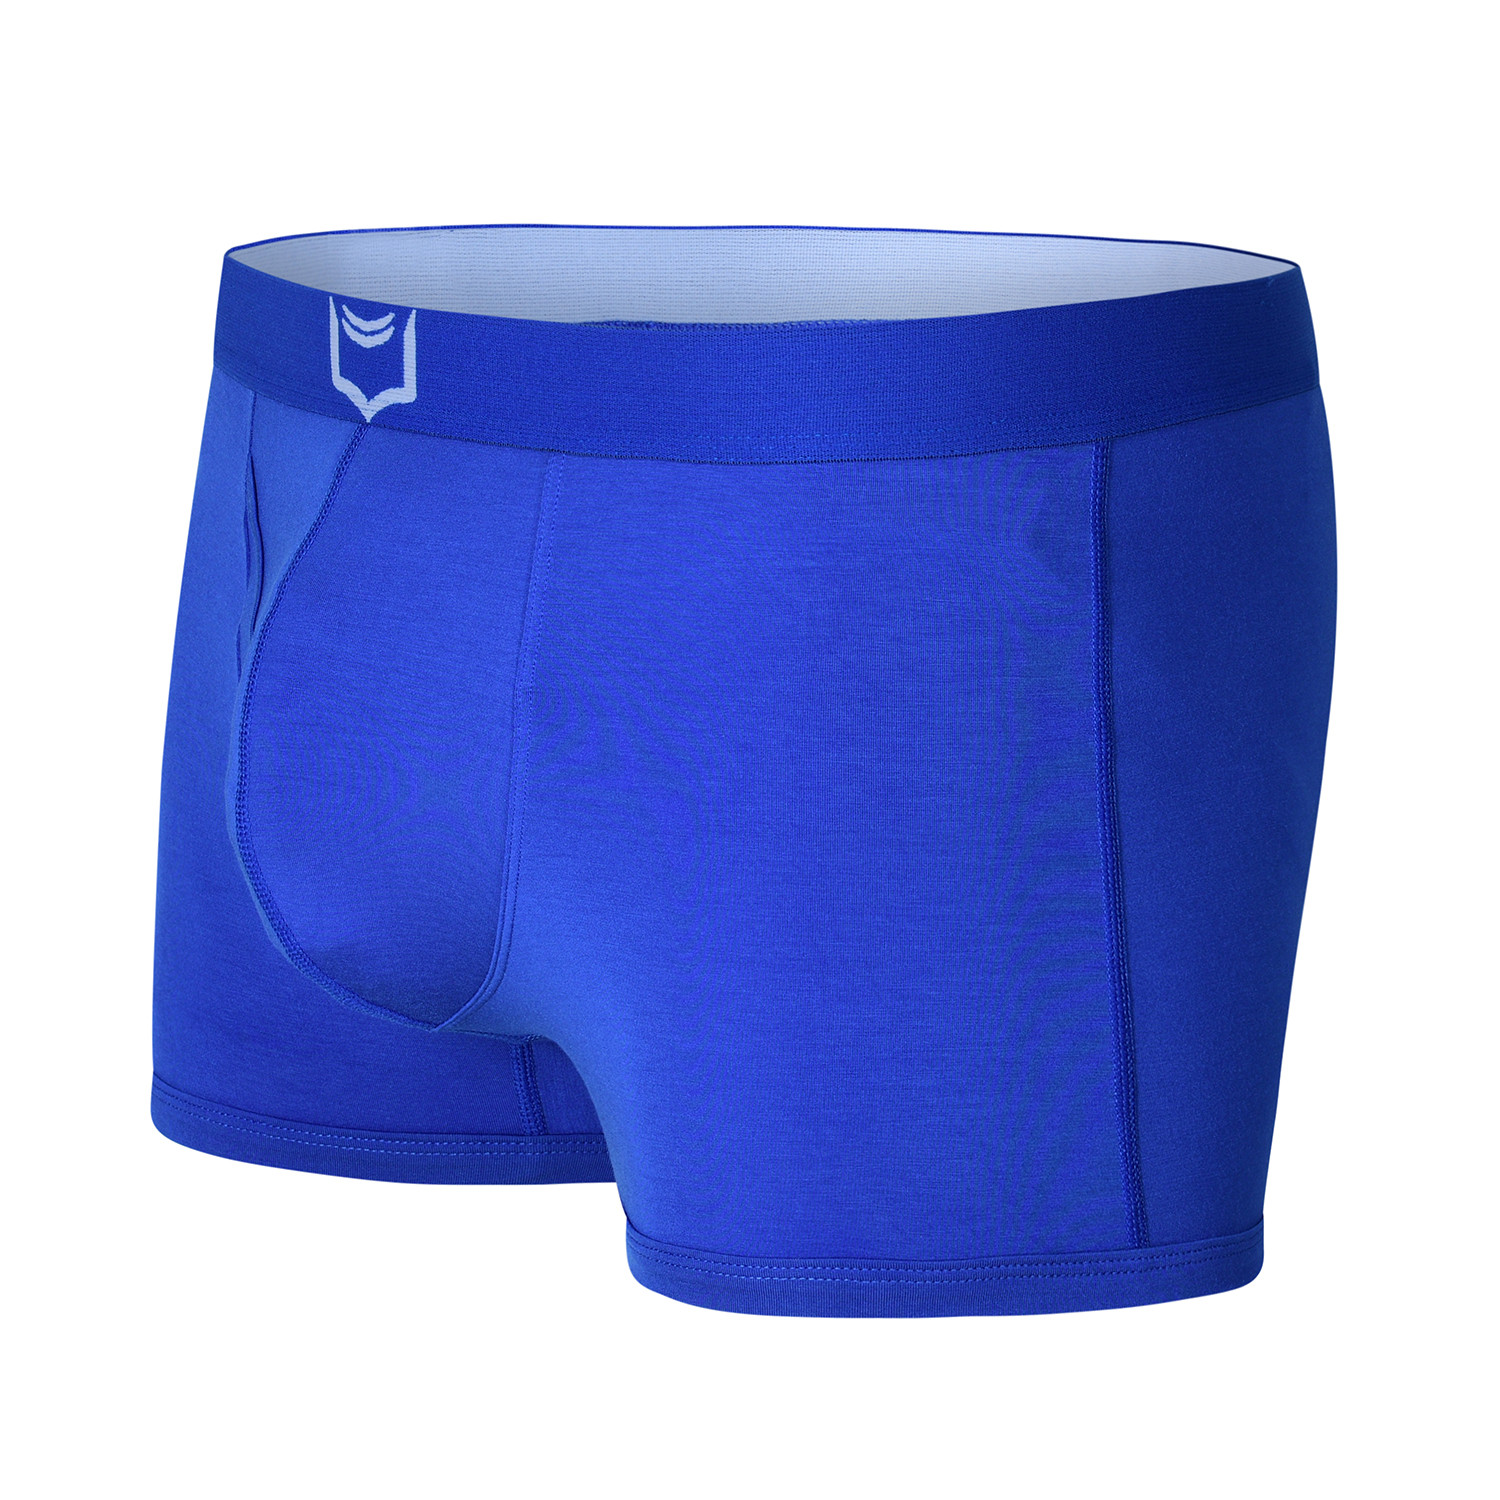 SHEATH 2.1 Men's Dual Pouch Trunks // Blue (L) - Sheath Underwear ...